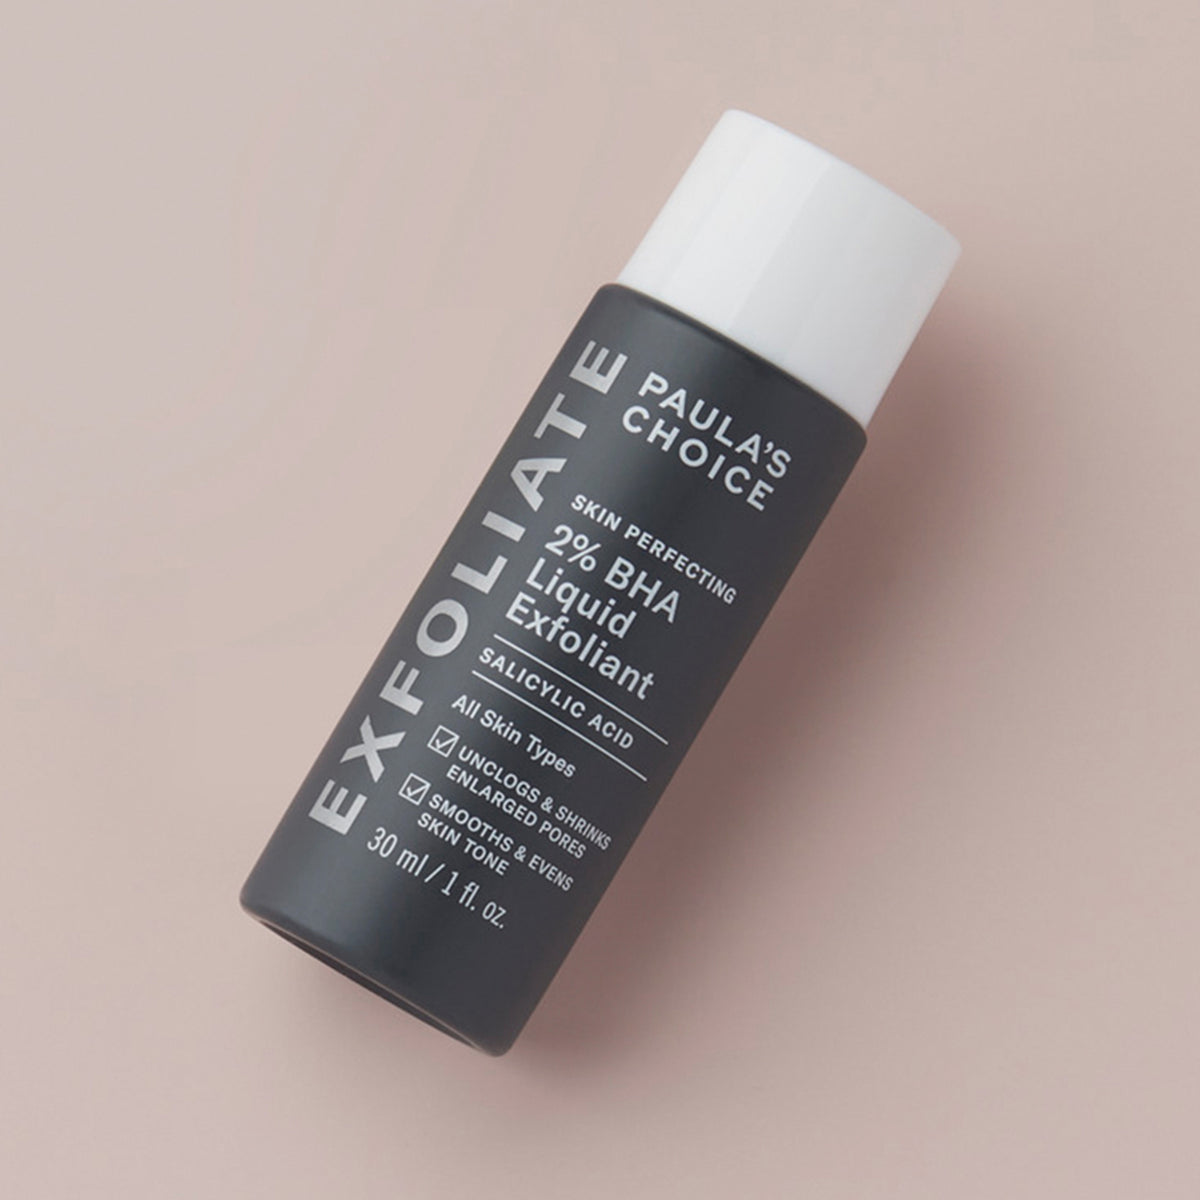 Paula's Choice | Skin Perfecting 2% BHA Liquid Exfoliant Deluxe Mini